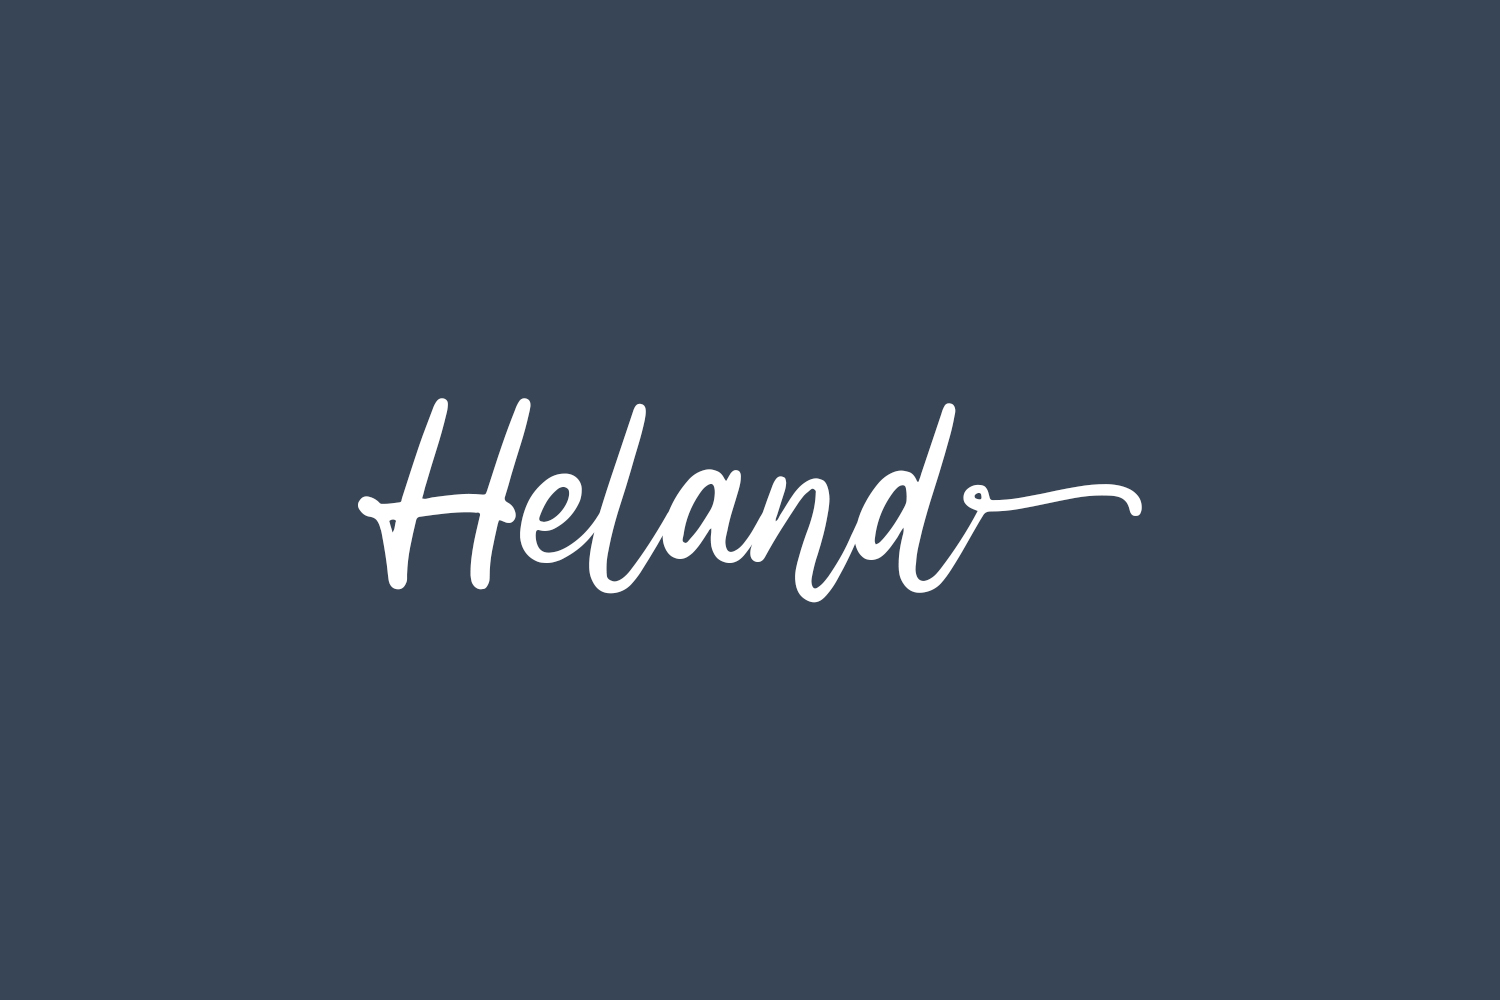 Heland Free Font